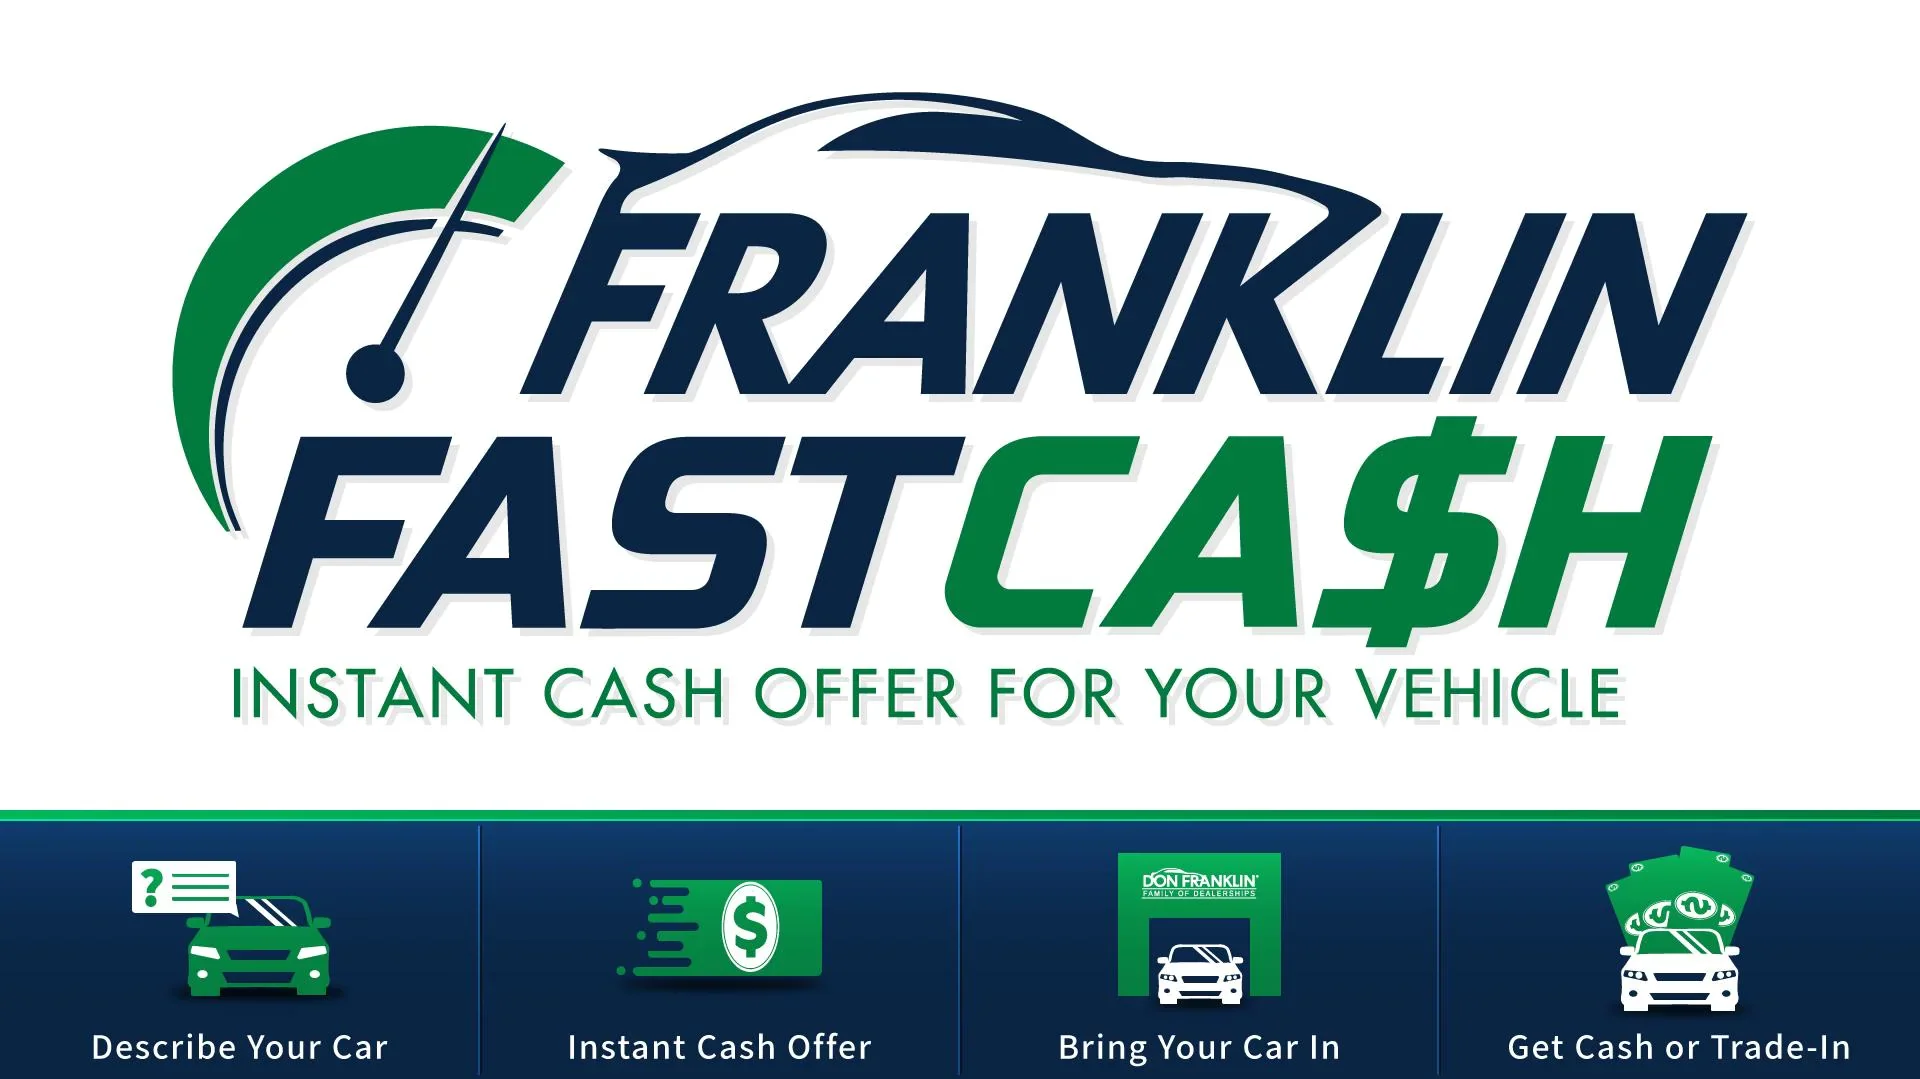 Franklin Fast Cash